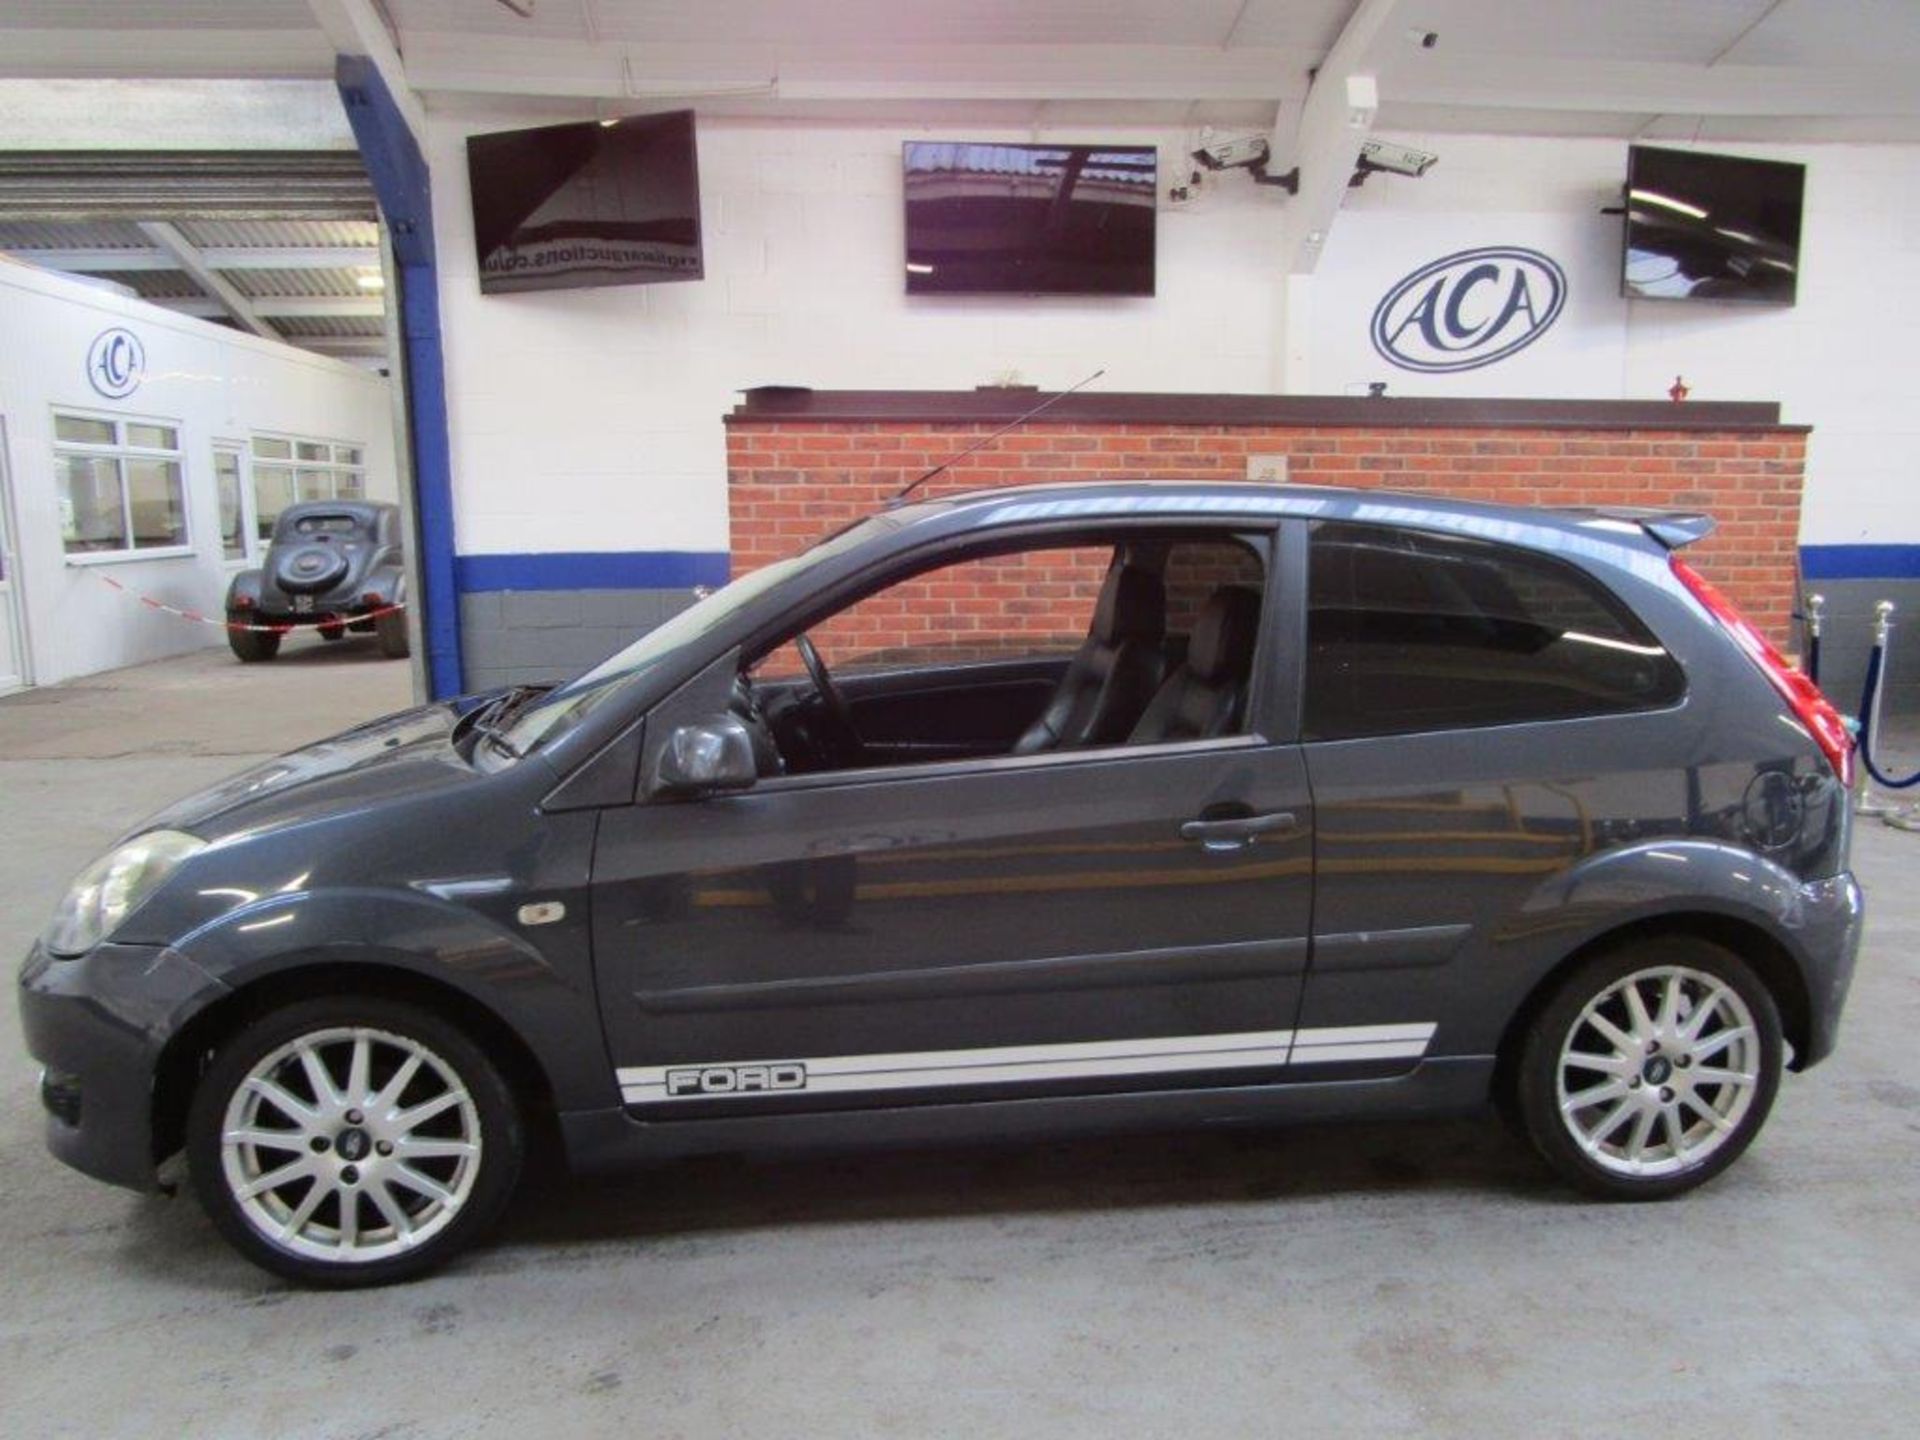 06 06 Ford Fiesta Zetec S - Image 2 of 21